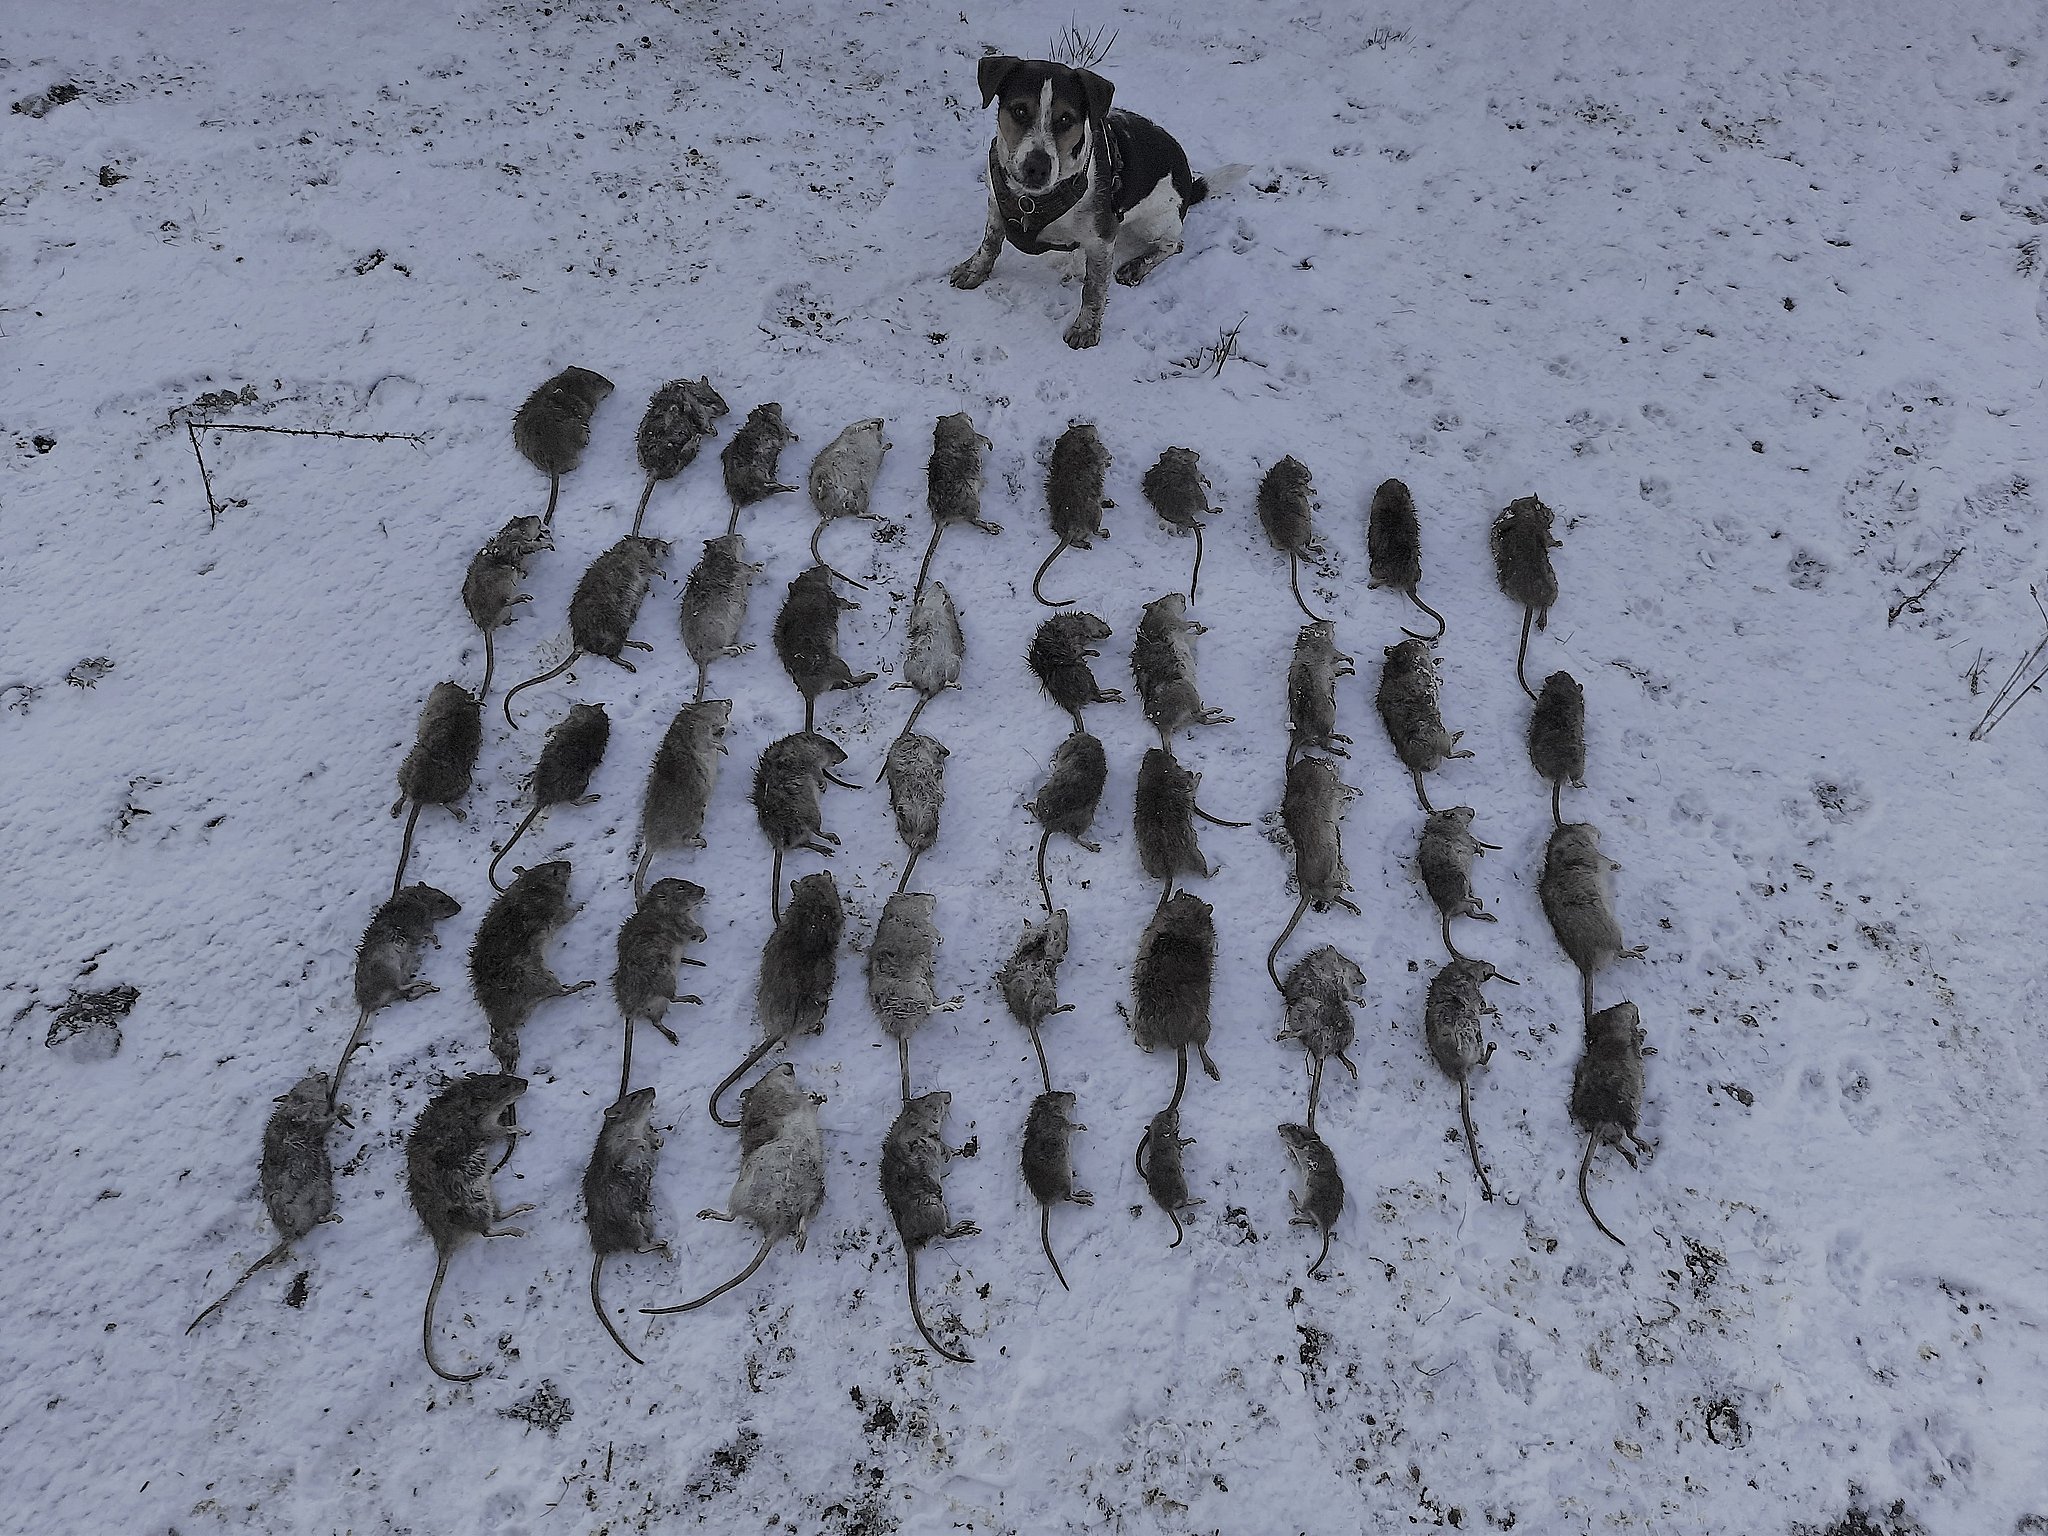 flamme garn Pointer Rottehunden Amigo slog 48 rotter ihjel på halvanden time | TV 2 Kosmopol